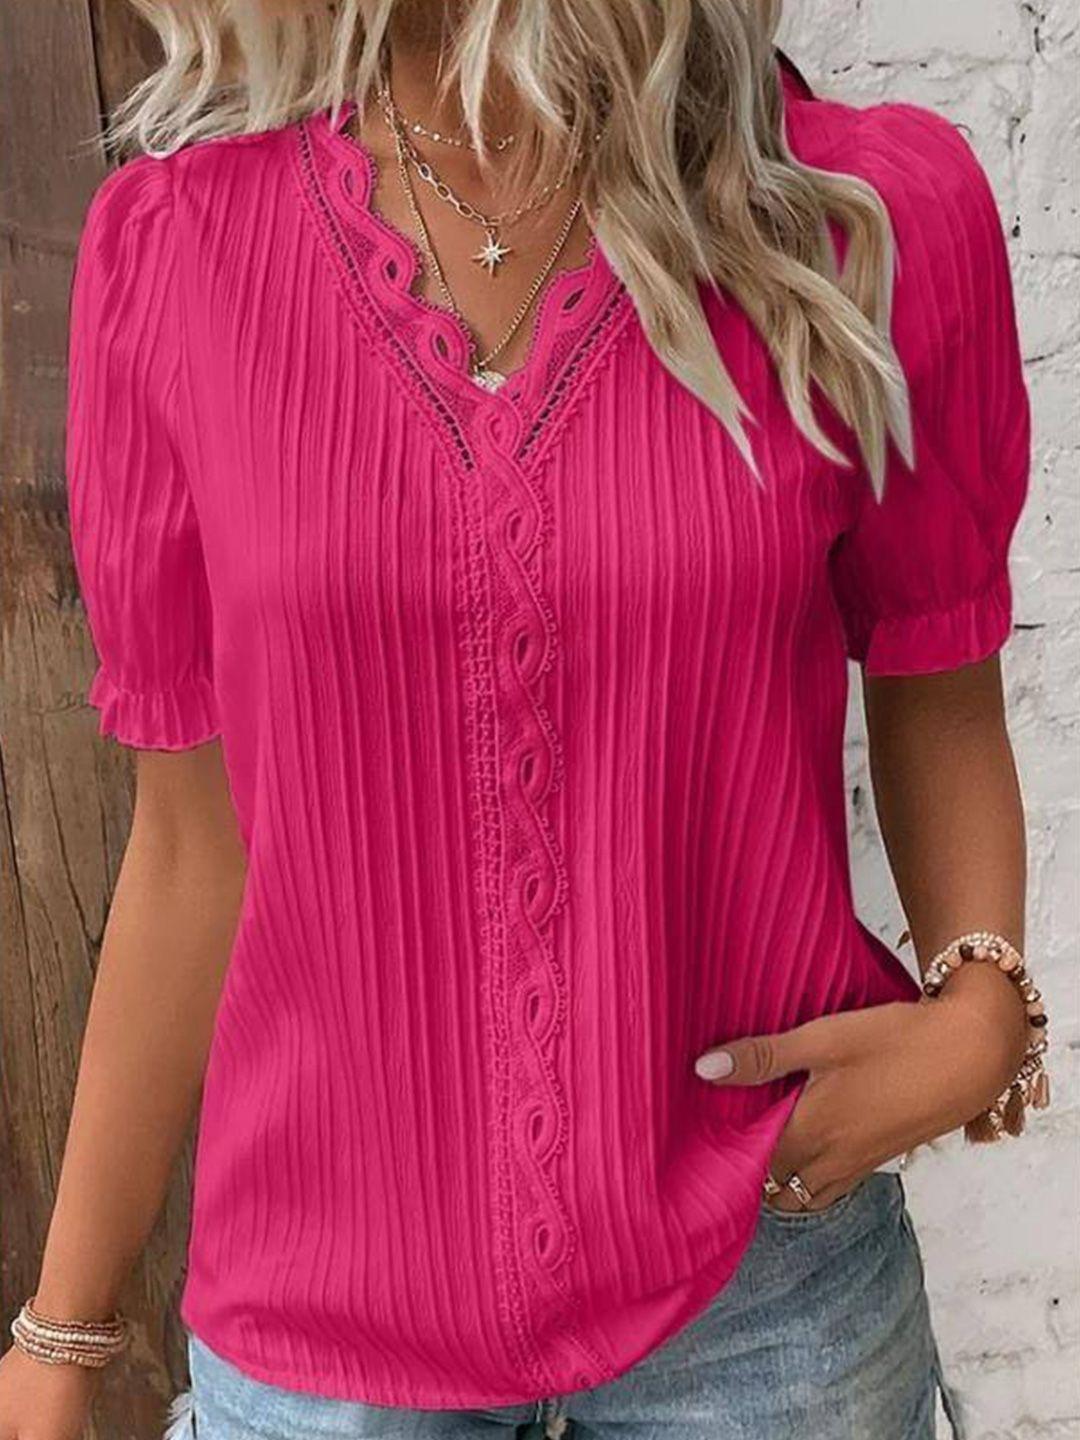 stylecast pink v-neck short sleeves top